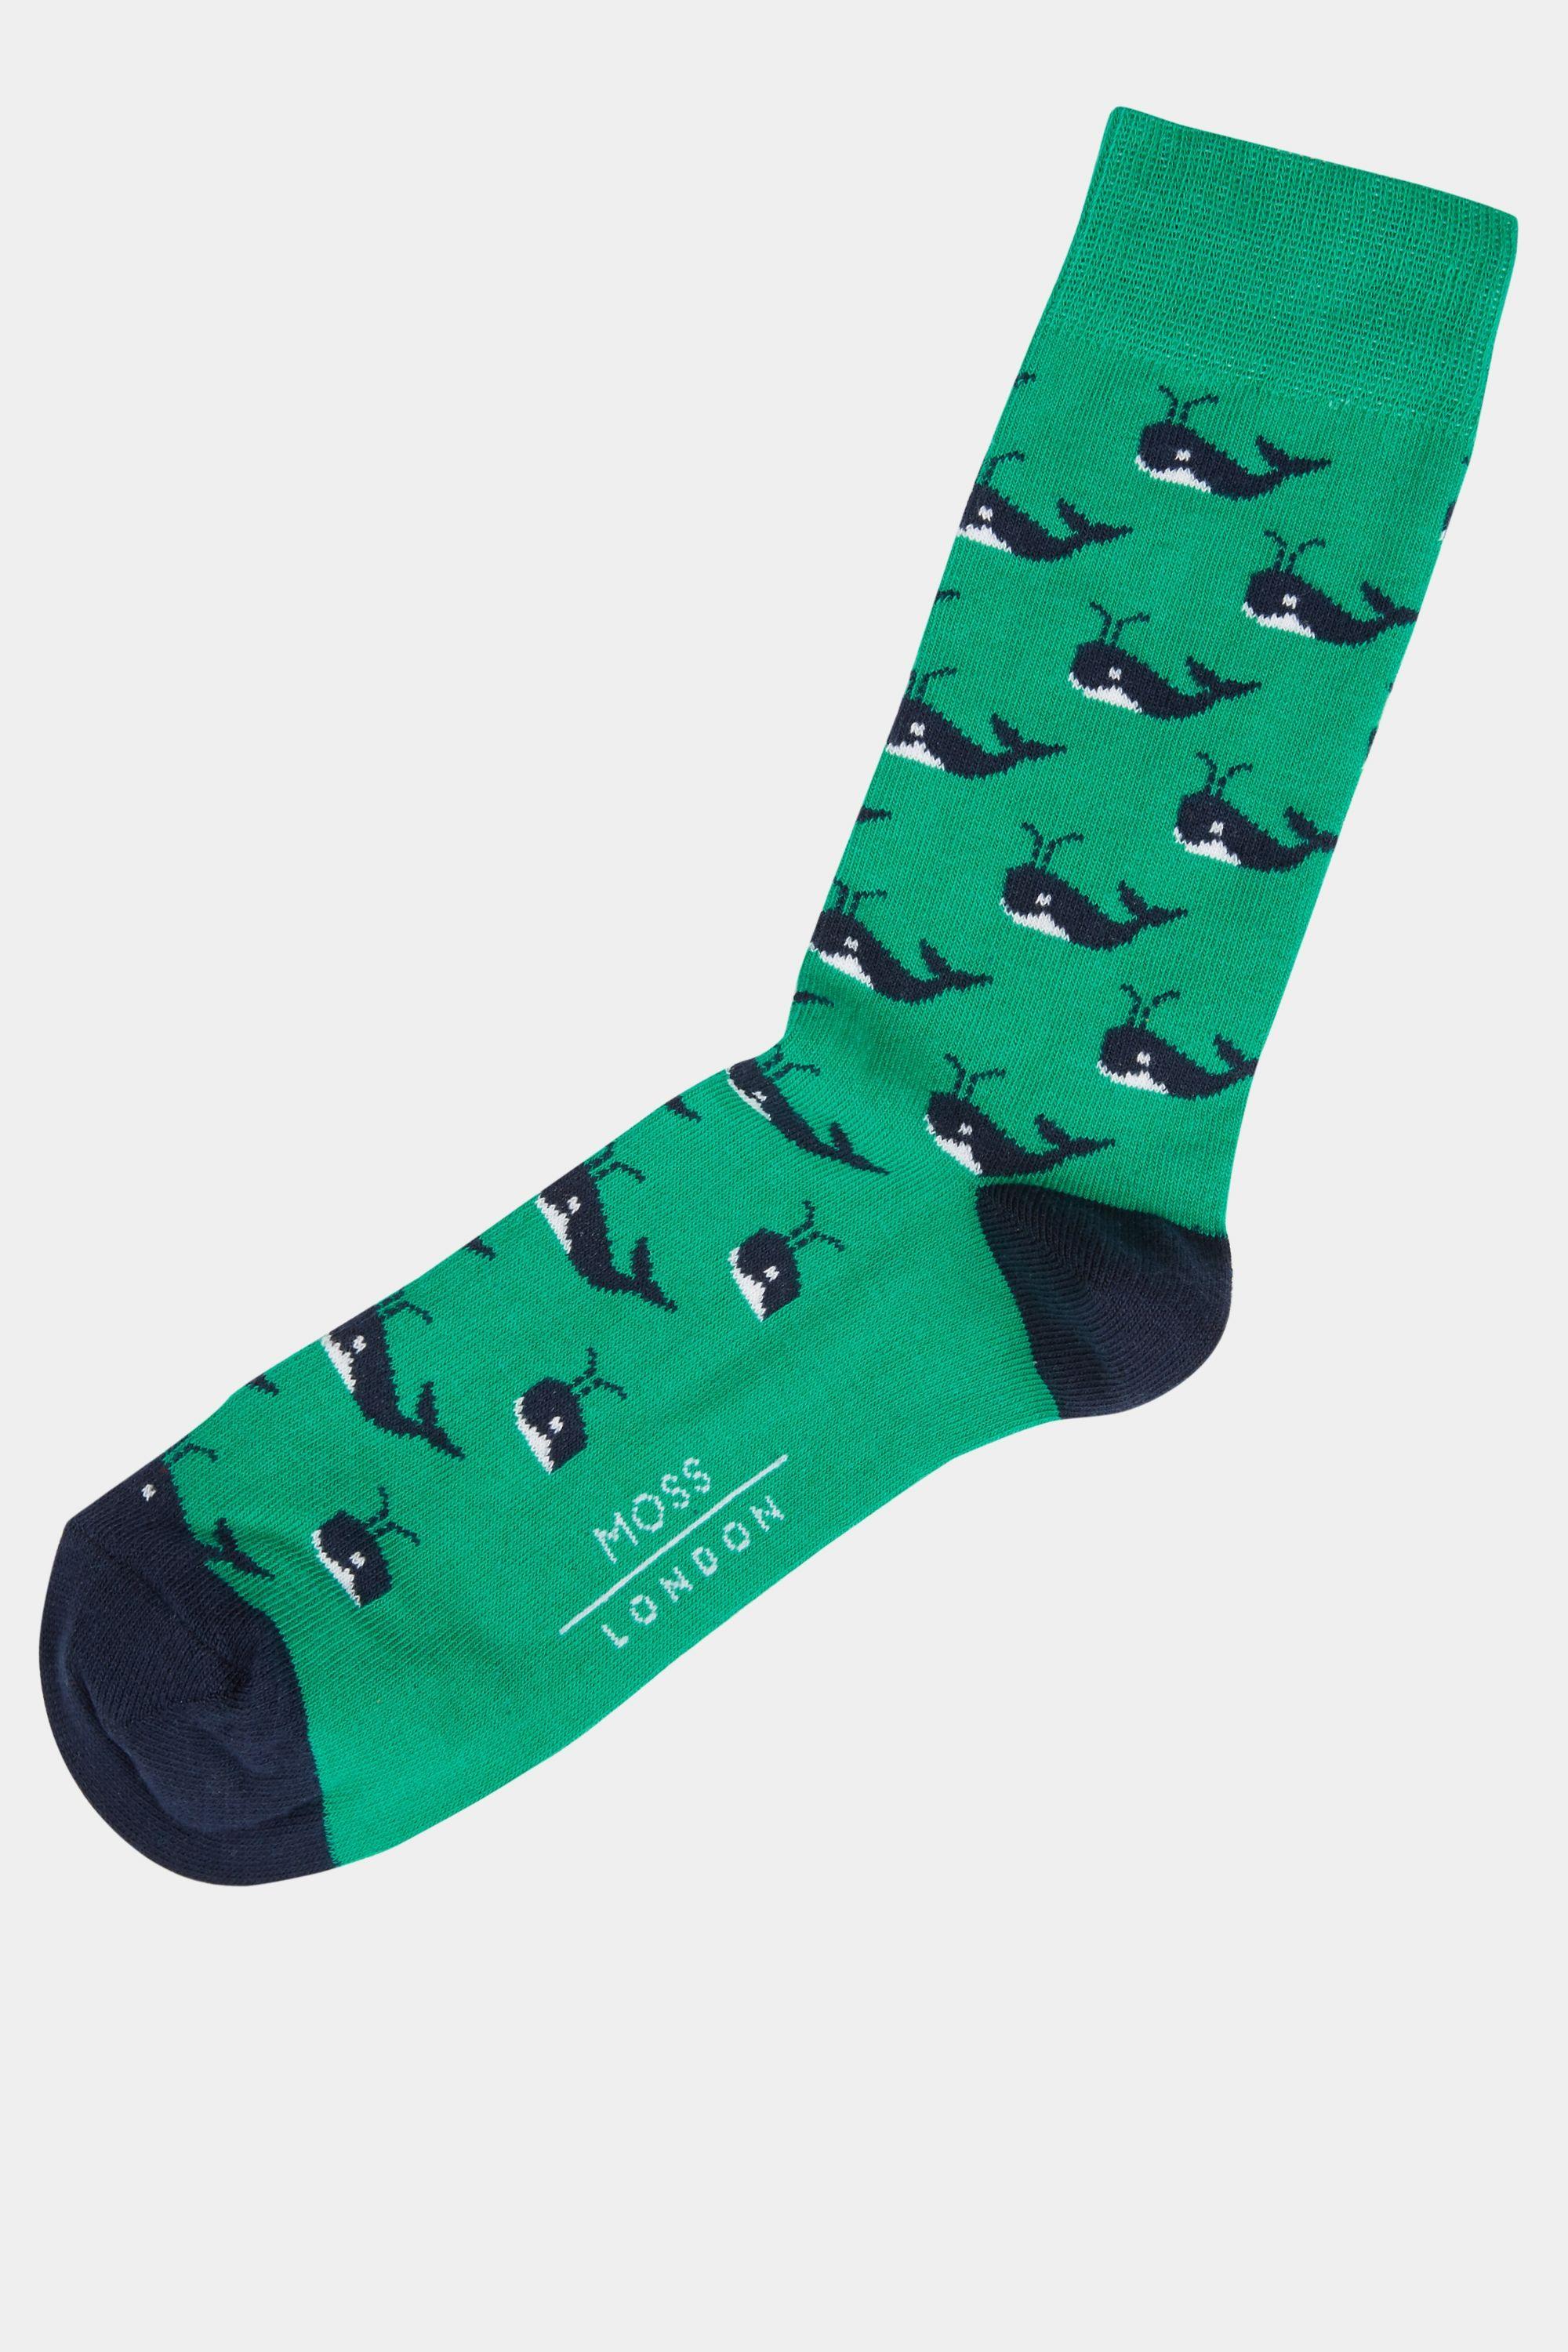 Green and Blue Whale Logo - Moss London Green & Blue Whale Socks